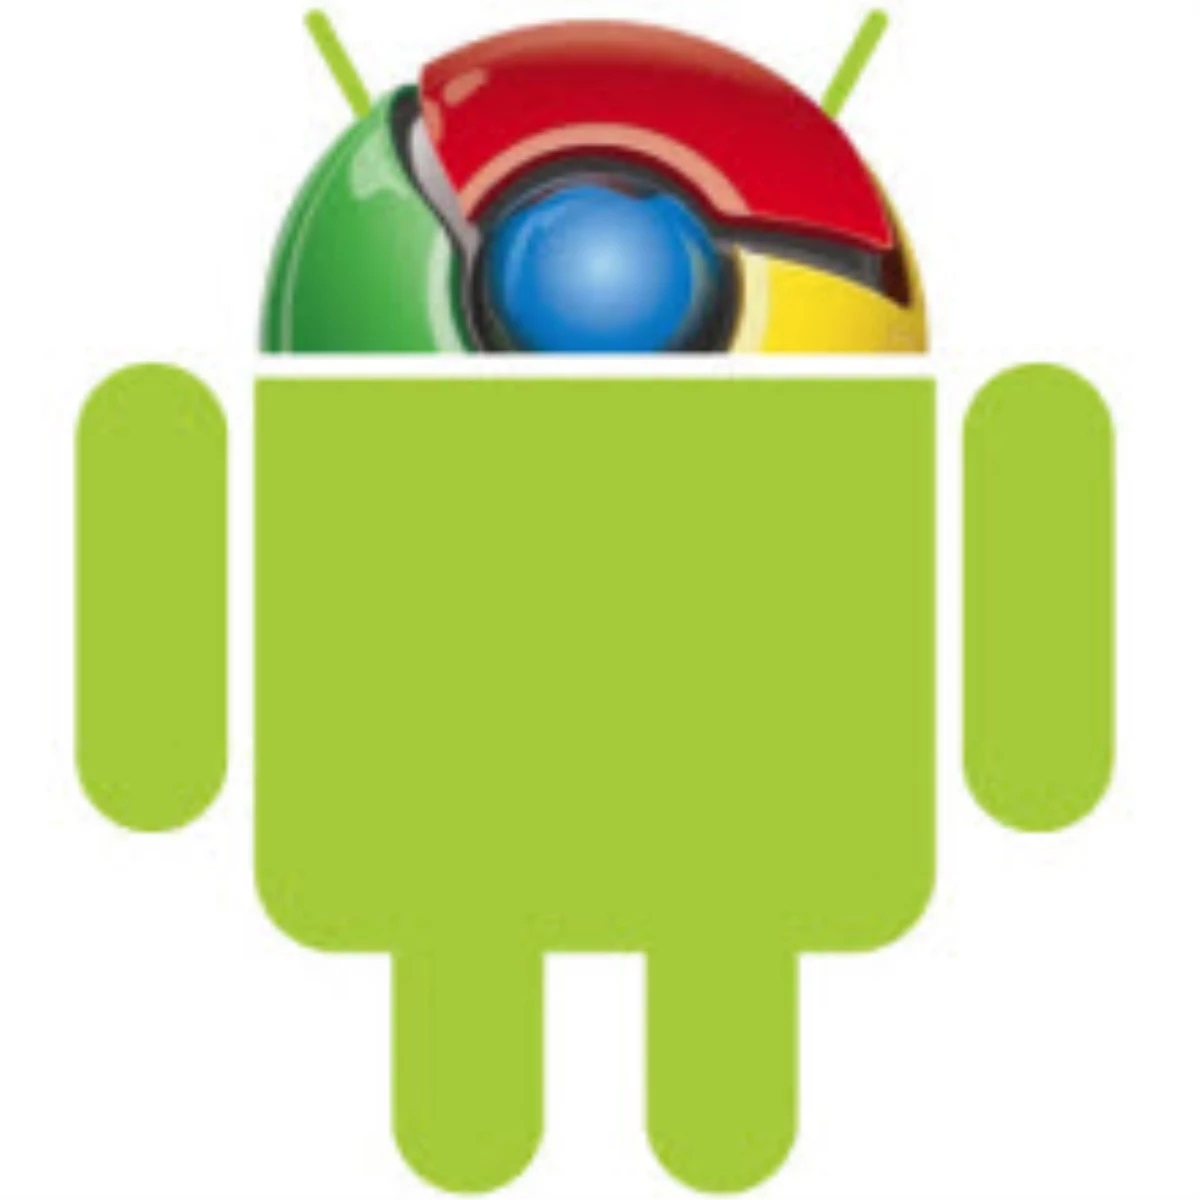 Android - Chrome birleşir mi?